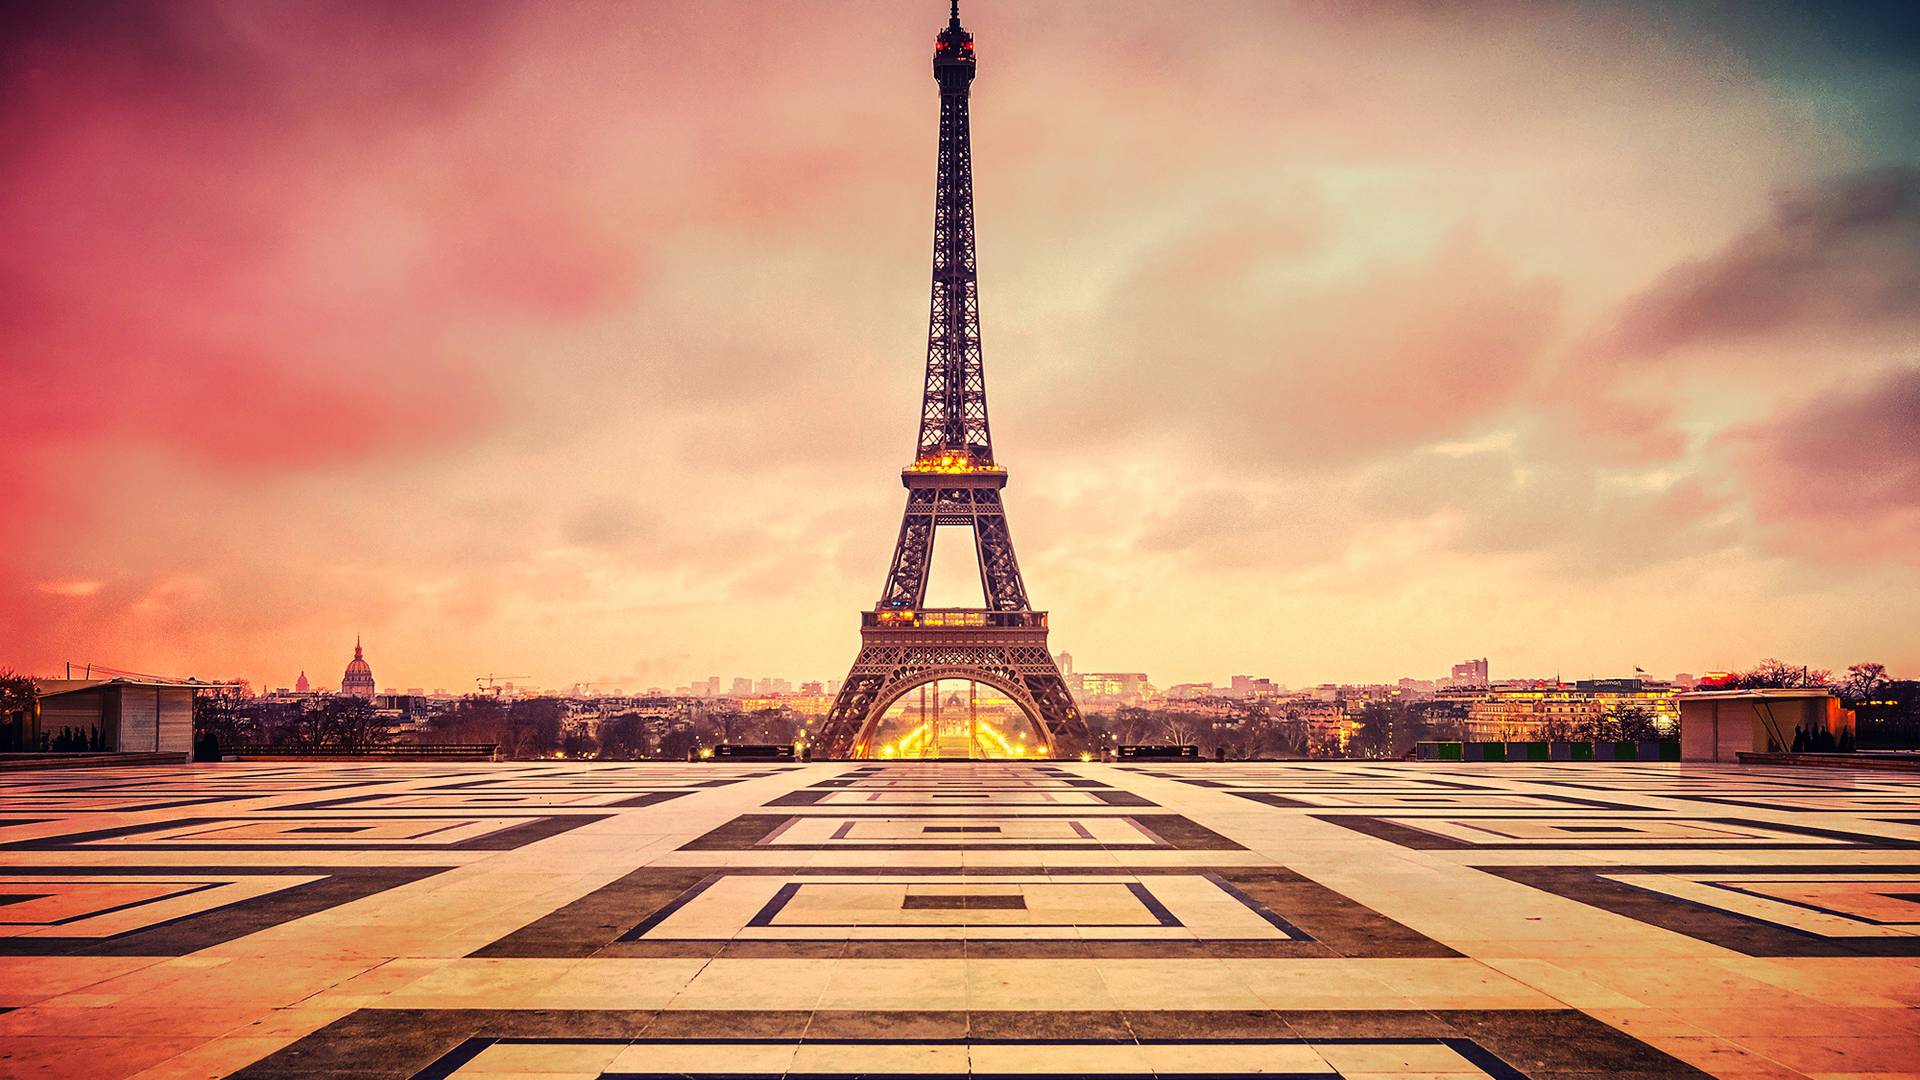 Eiffel Tower Wallpaper App Android क लए डउनलड  9Apps